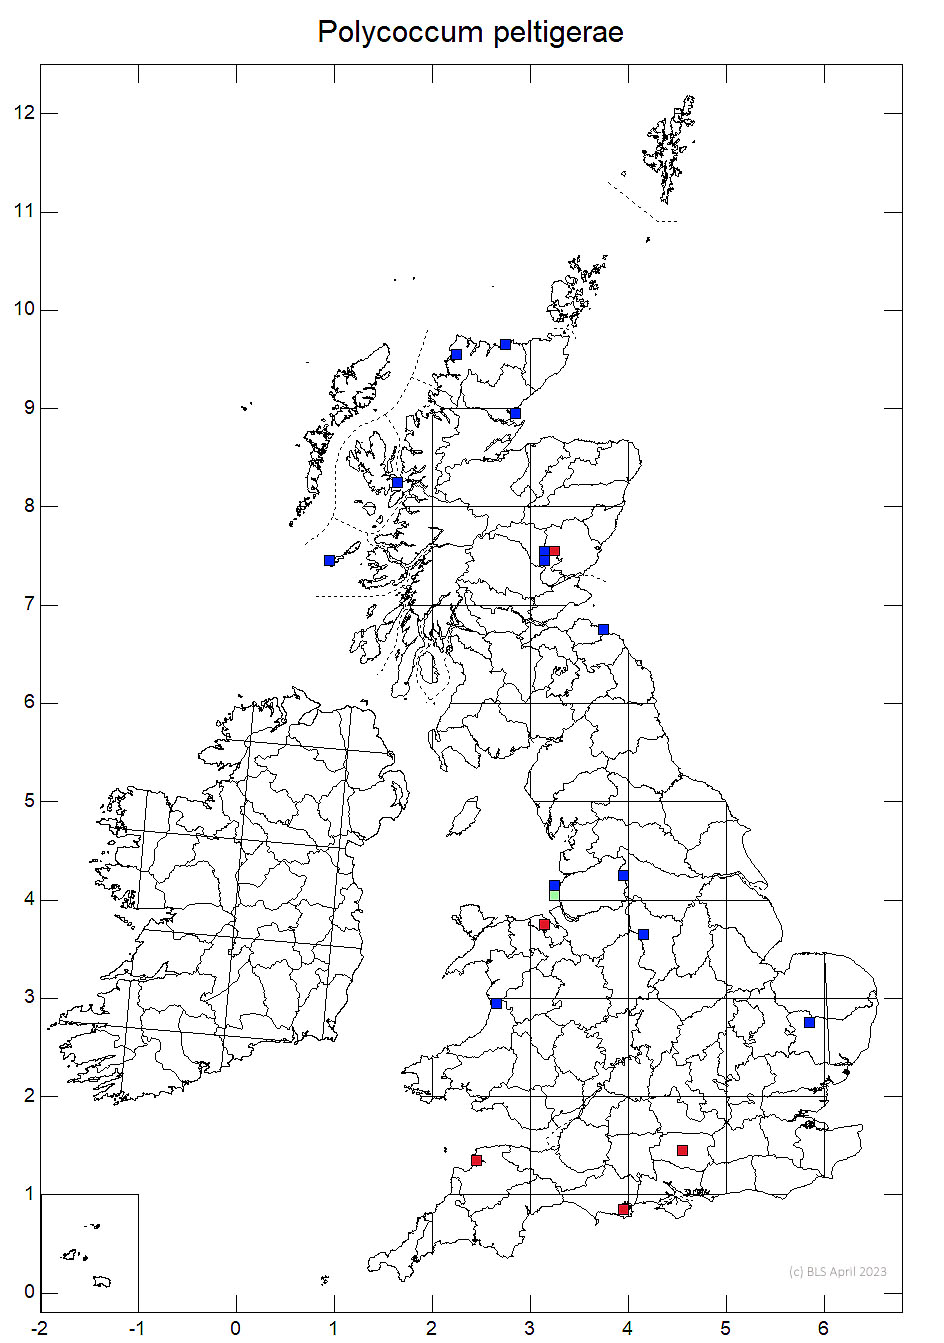 Polycoccum peltigerae 10km sq distribution map